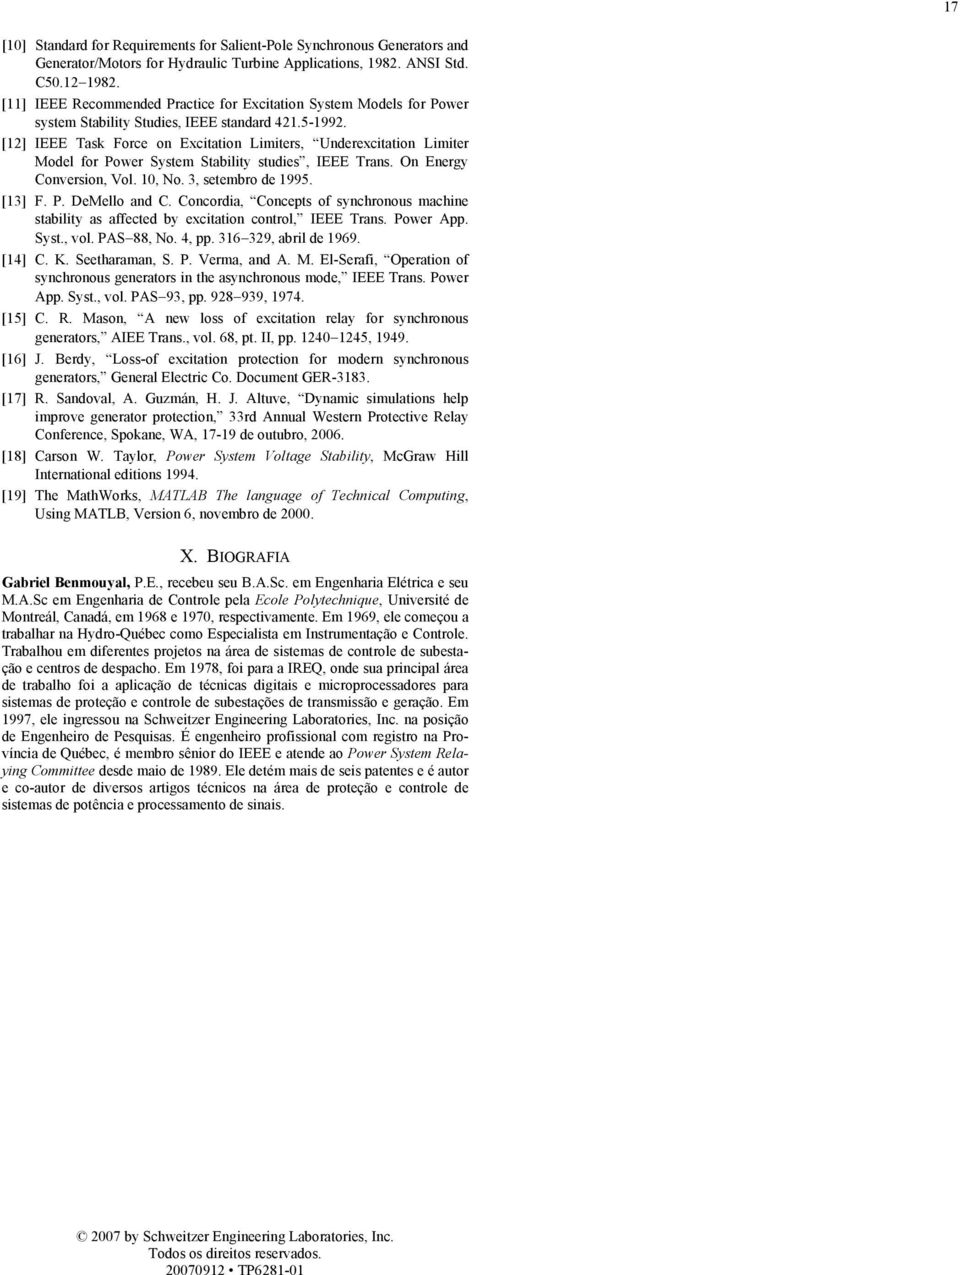 Cncria, Cncpts f synchrnus machin stability as affct by xcitatin cntrl, I Trans. Pwr App. Syst., vl. PAS 88, N. 4, pp. 36 39, abril 969. [4] C.. Stharaman, S. P. Vrma, an A. M.